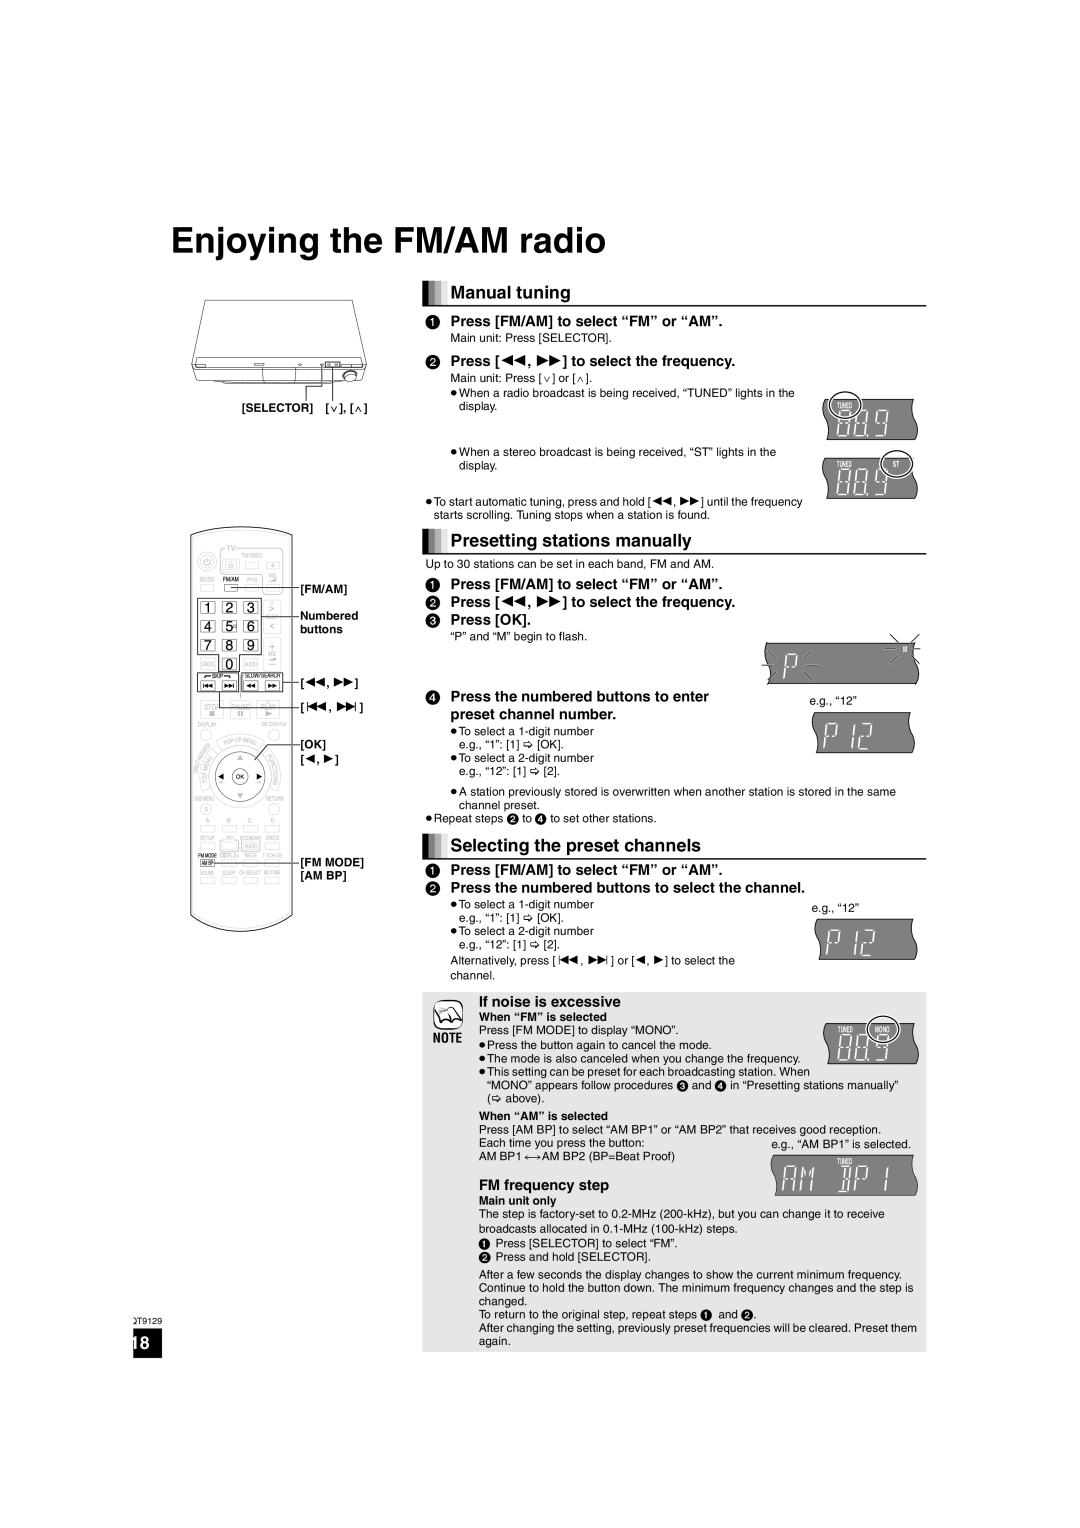 Panasonic SC-BT100 Enjoying the FM/AM radio, Manual tuning, Presetting stations manually, Selecting the preset channels 